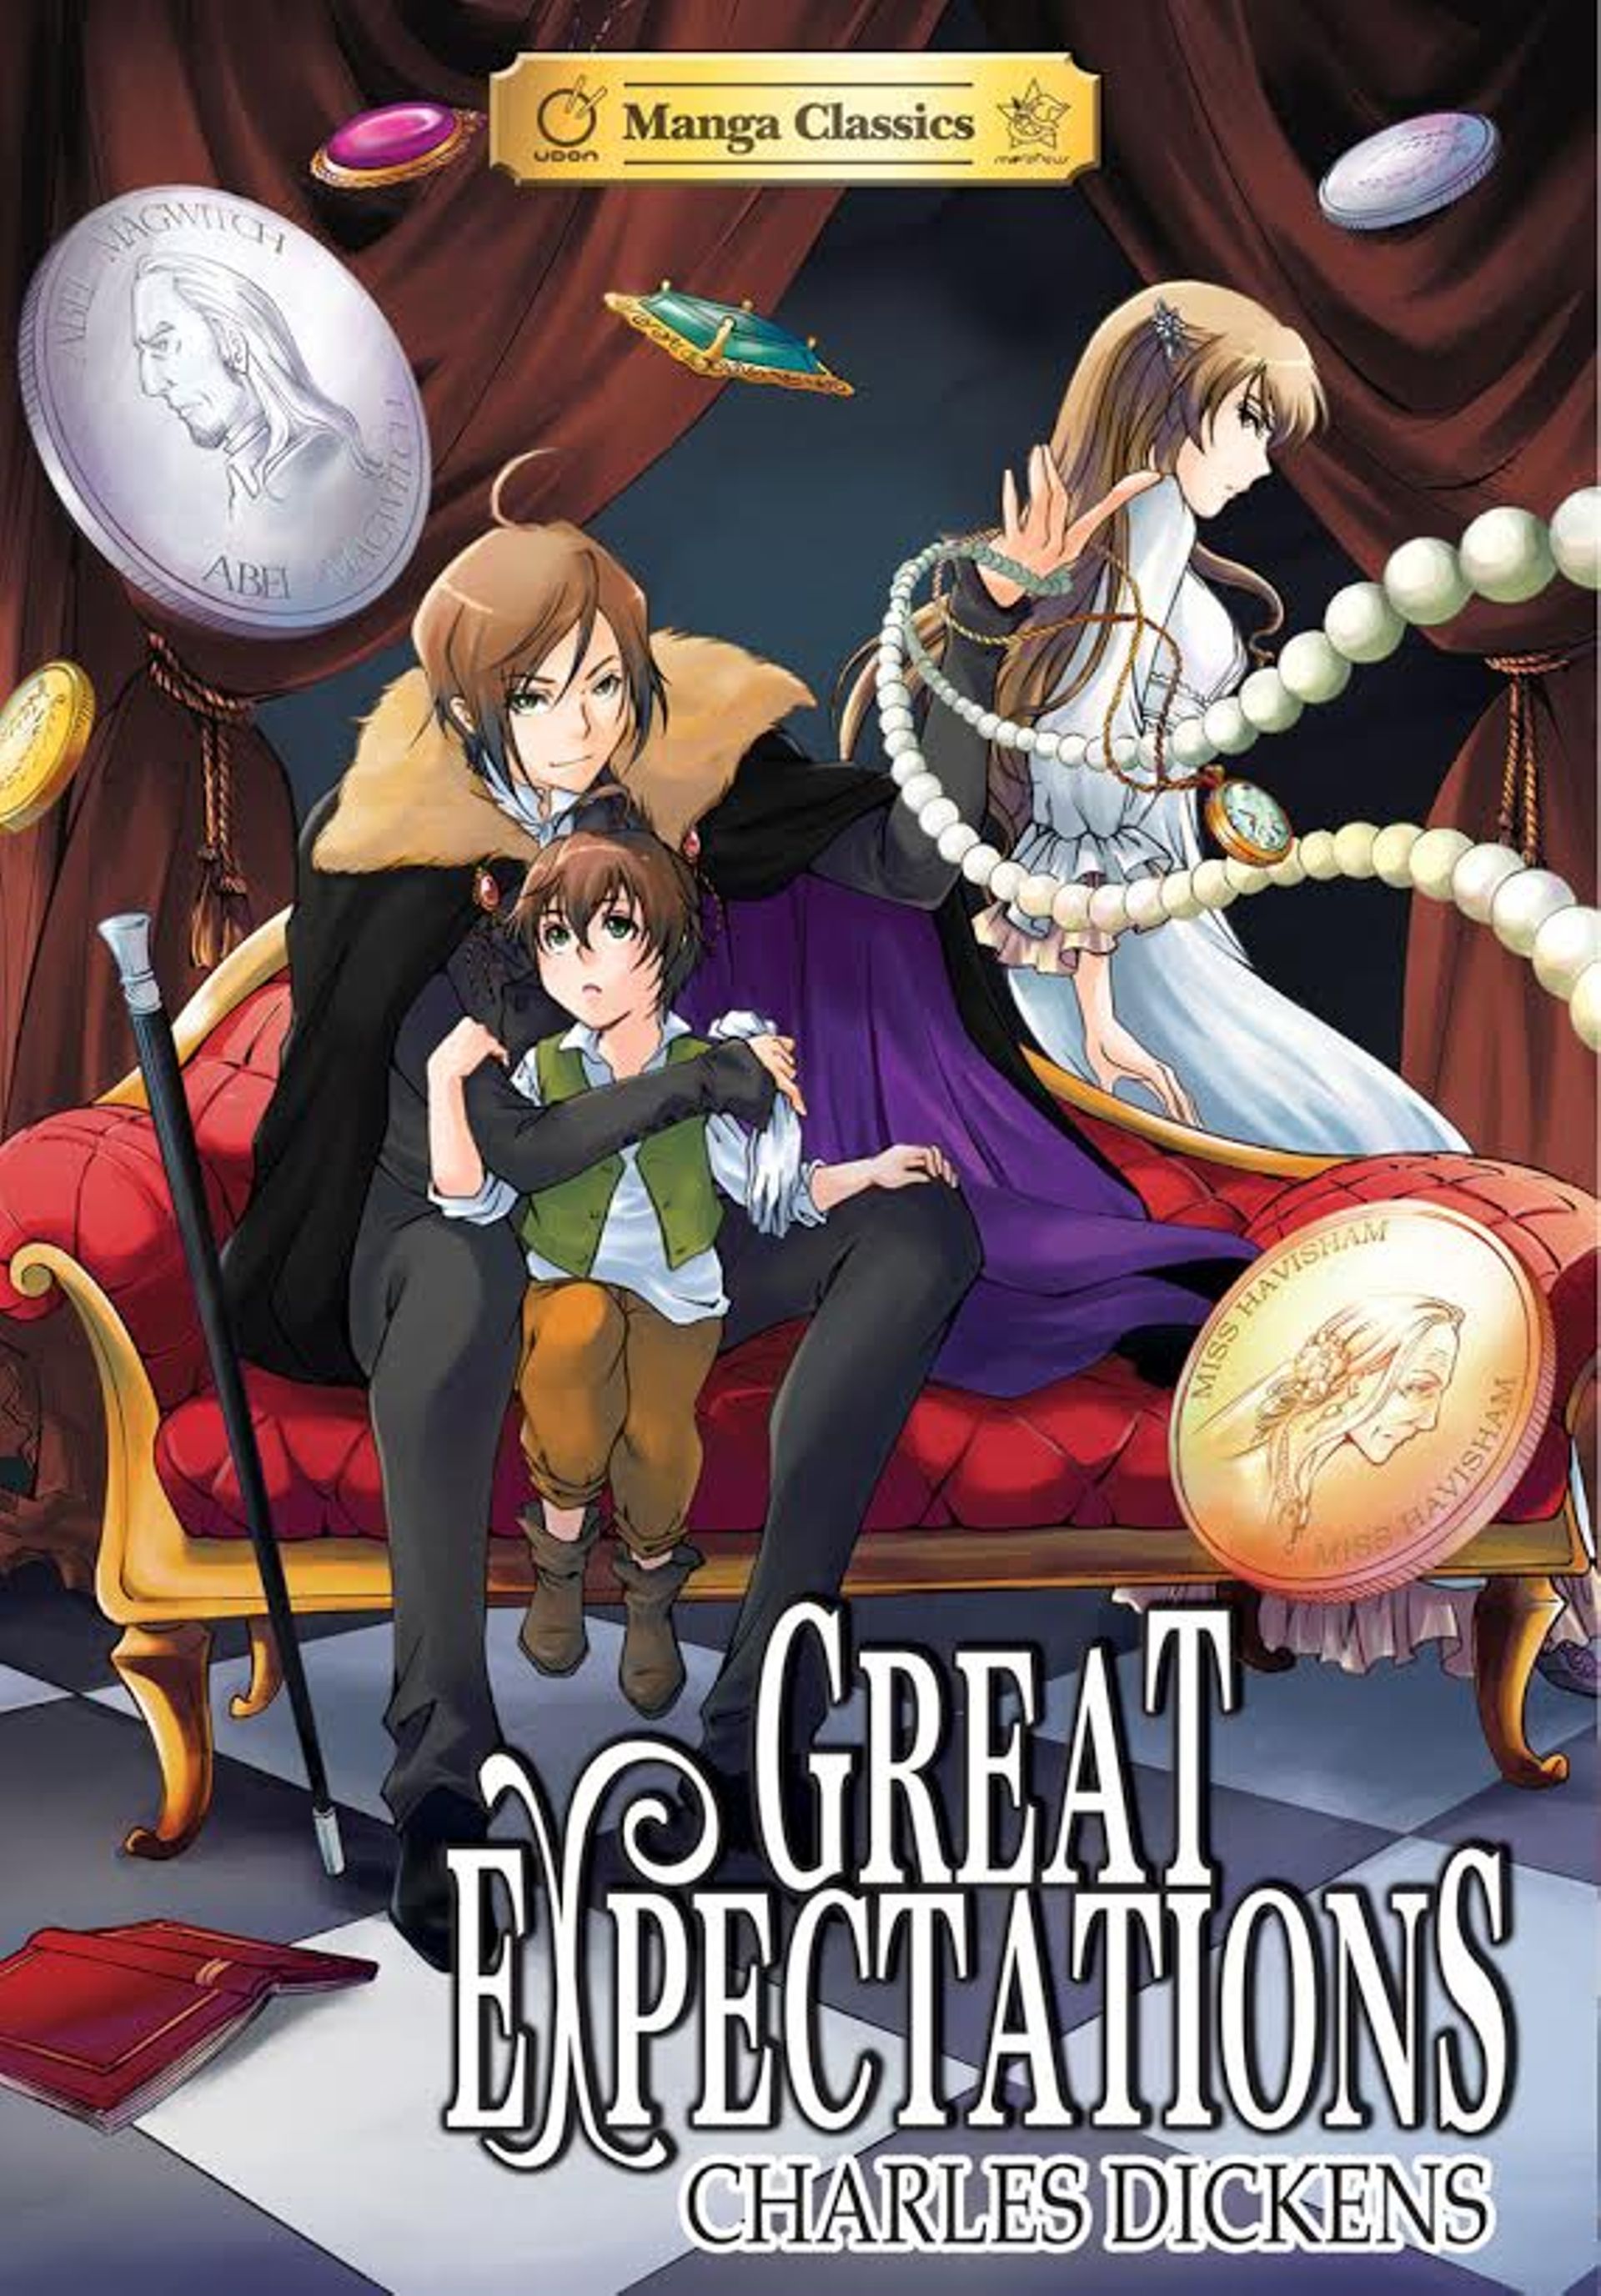 "De grandes attentes" de Charles Dickens (Udon Entertainment)